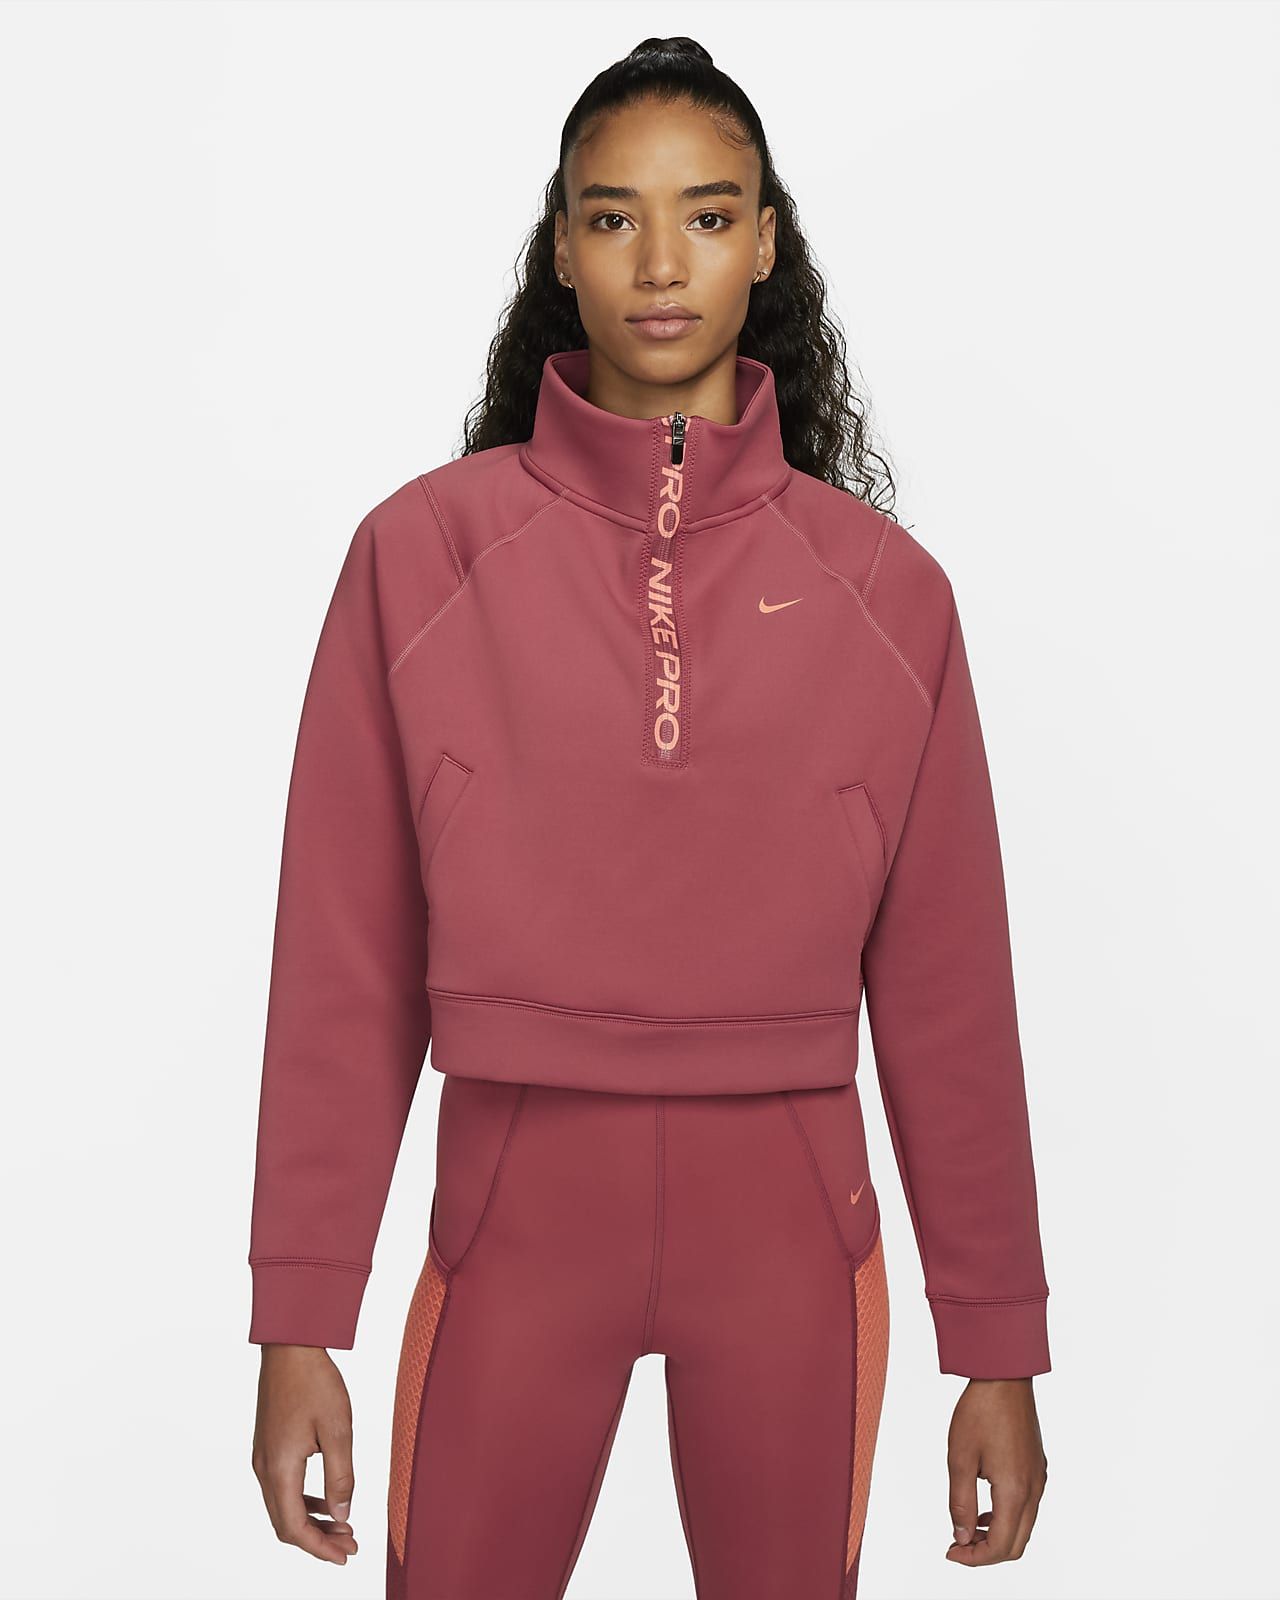 Women's 1/2-Zip Training Top | Nike (US)